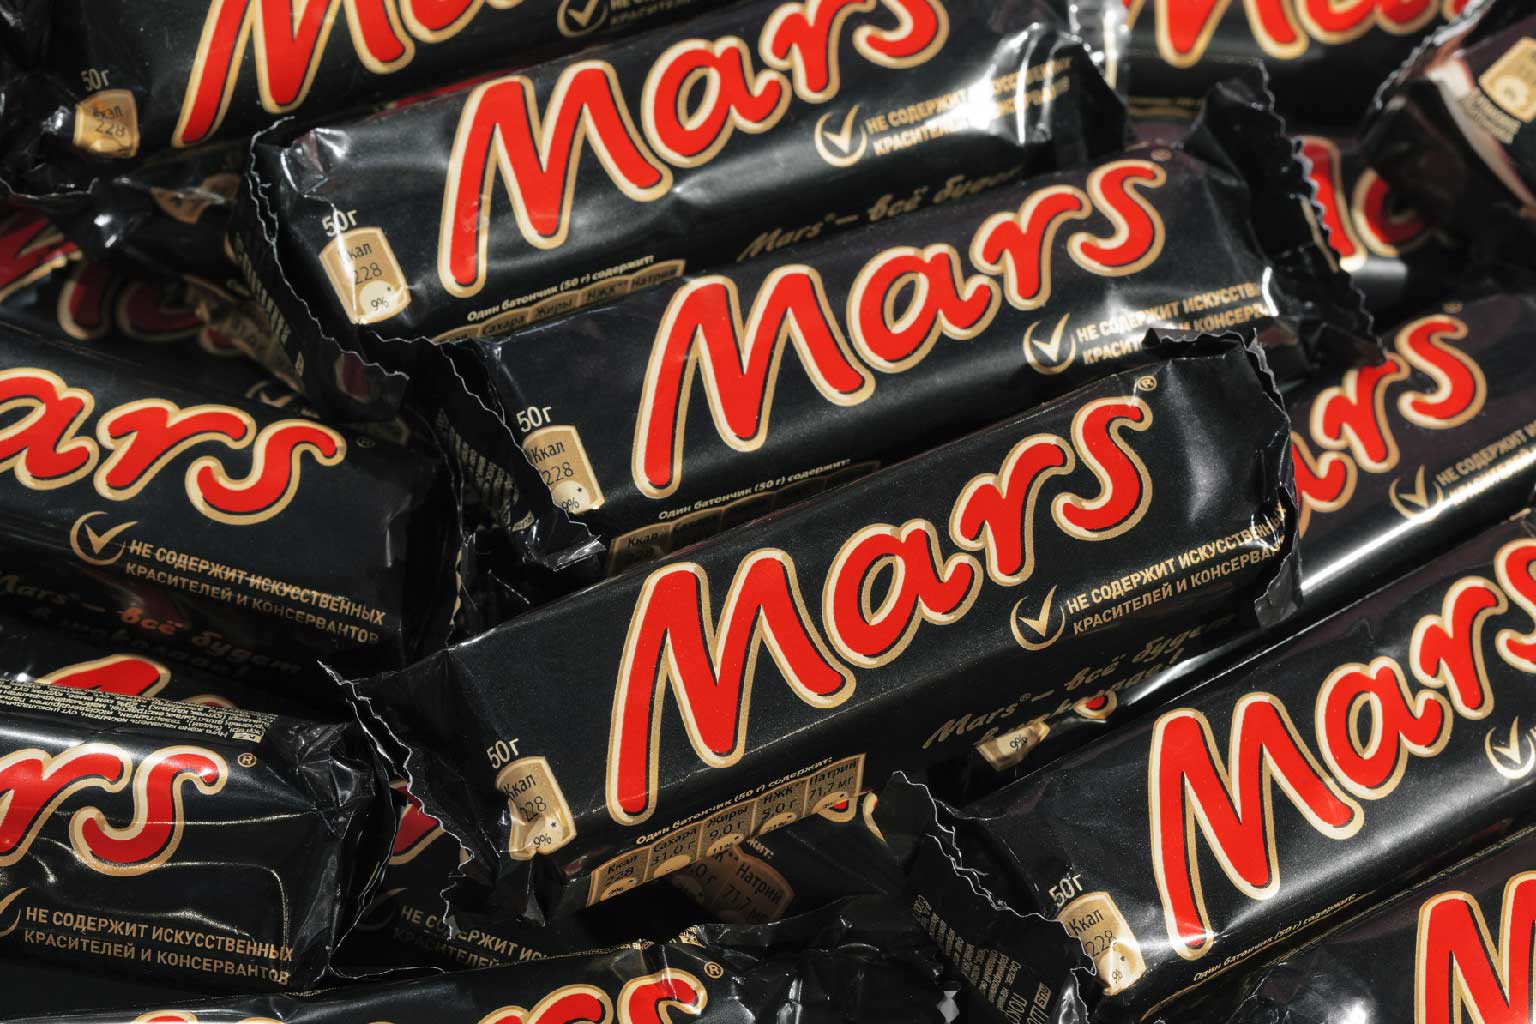 A pile of Mars bars